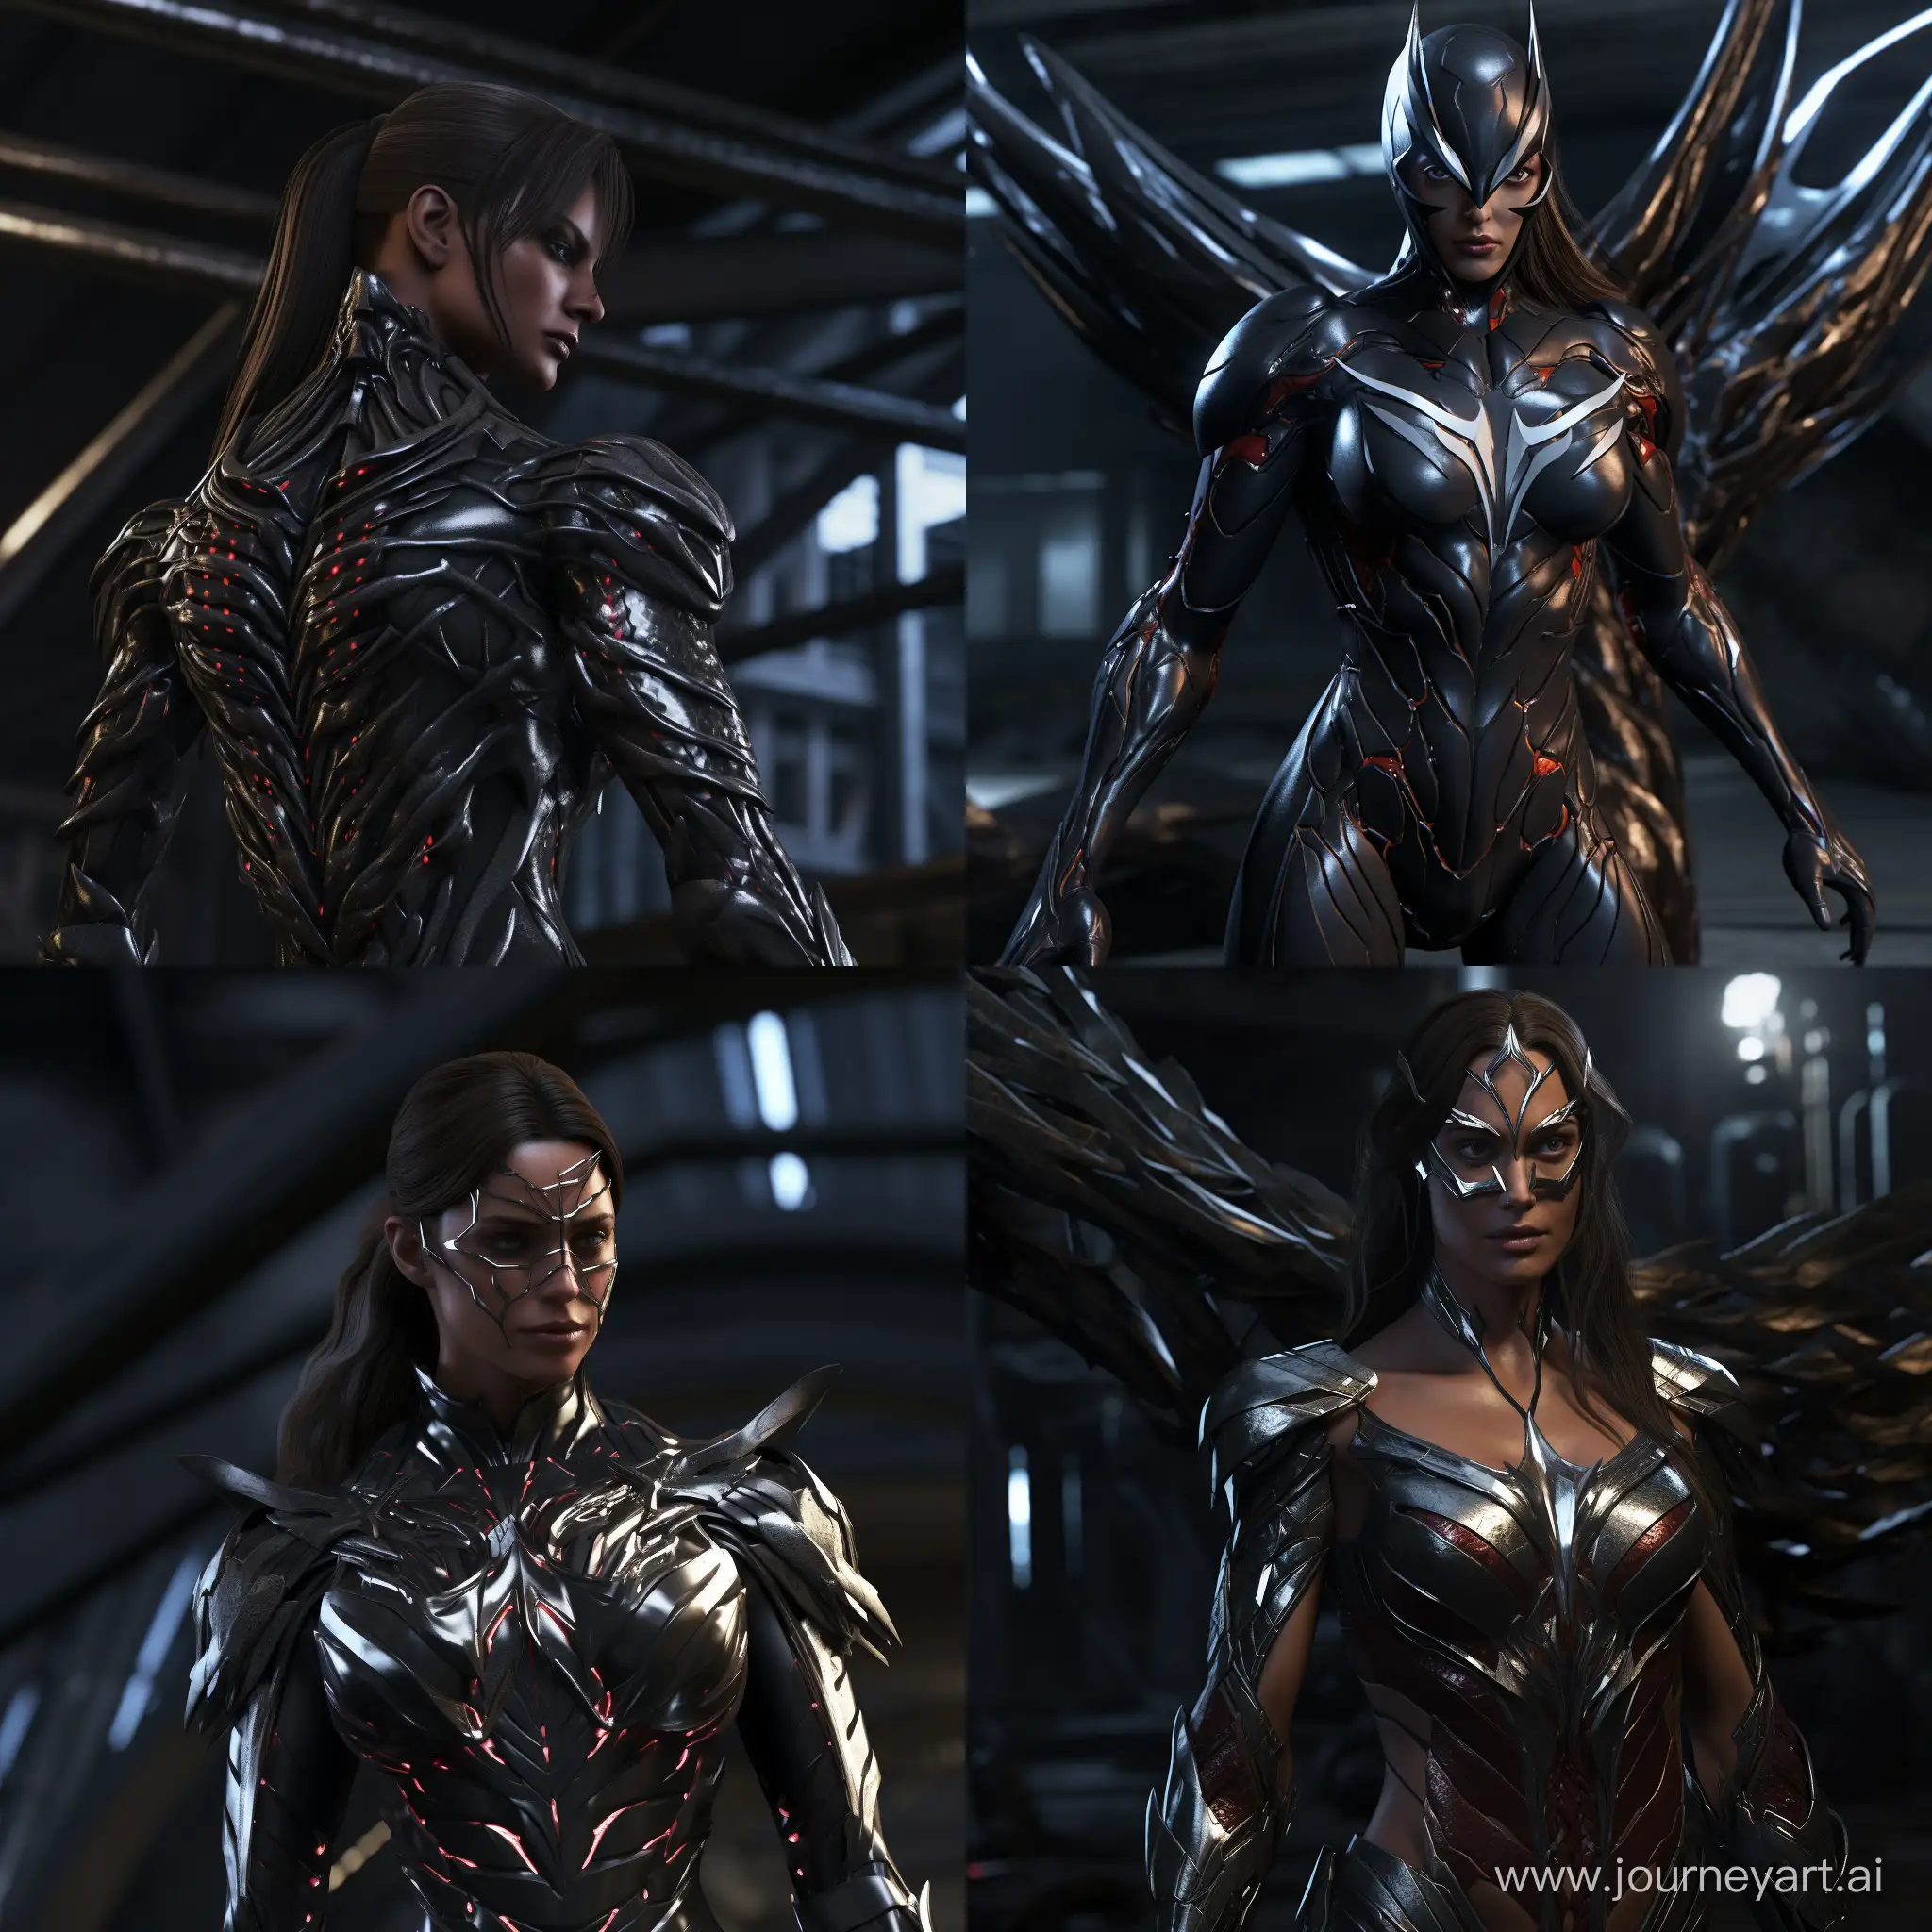 Wonder-Woman-and-Venom-Symbiote-Cybernetic-Encounter-in-Hyperrealistic-Cinematic-Lighting